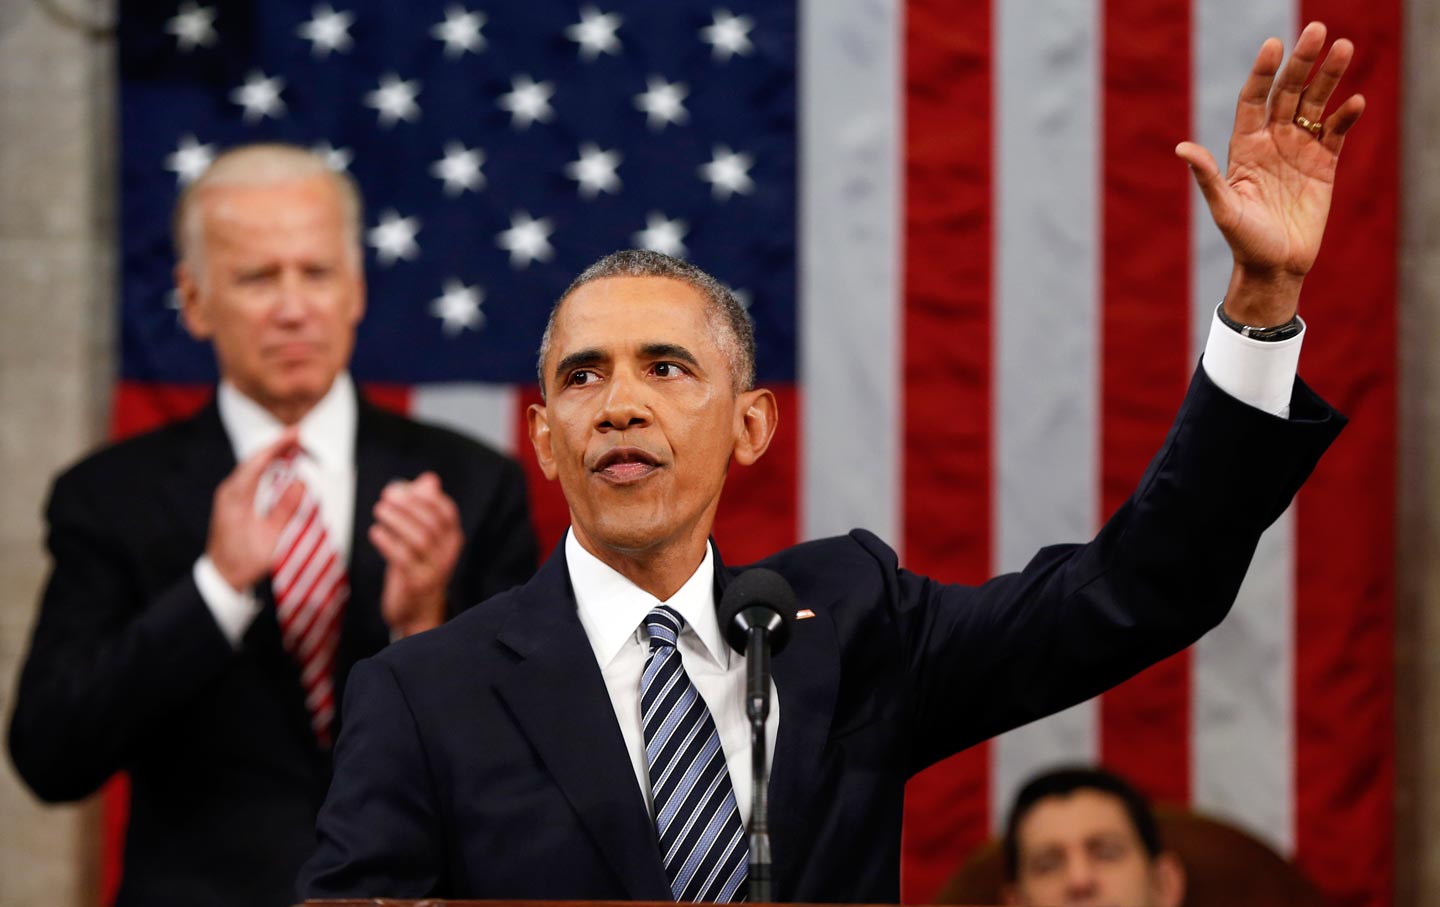 Obama’s Last State of the Union: Wonderful Rhetoric, Messy Realities